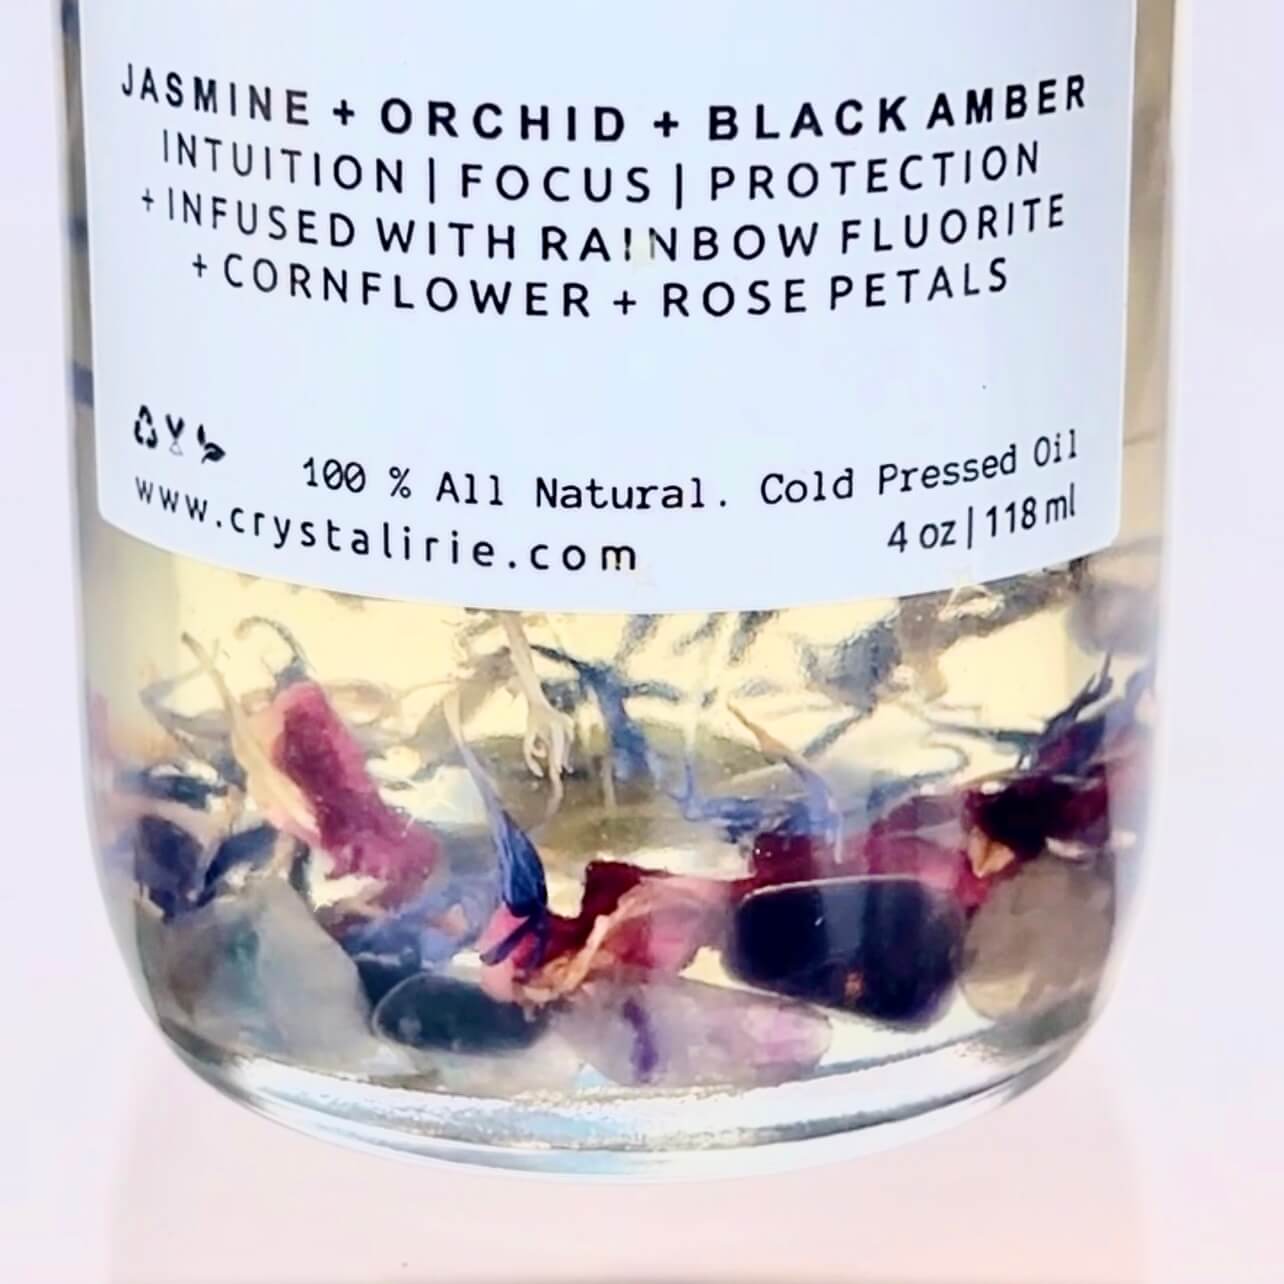 Black Amber Musk - Perfume Oil